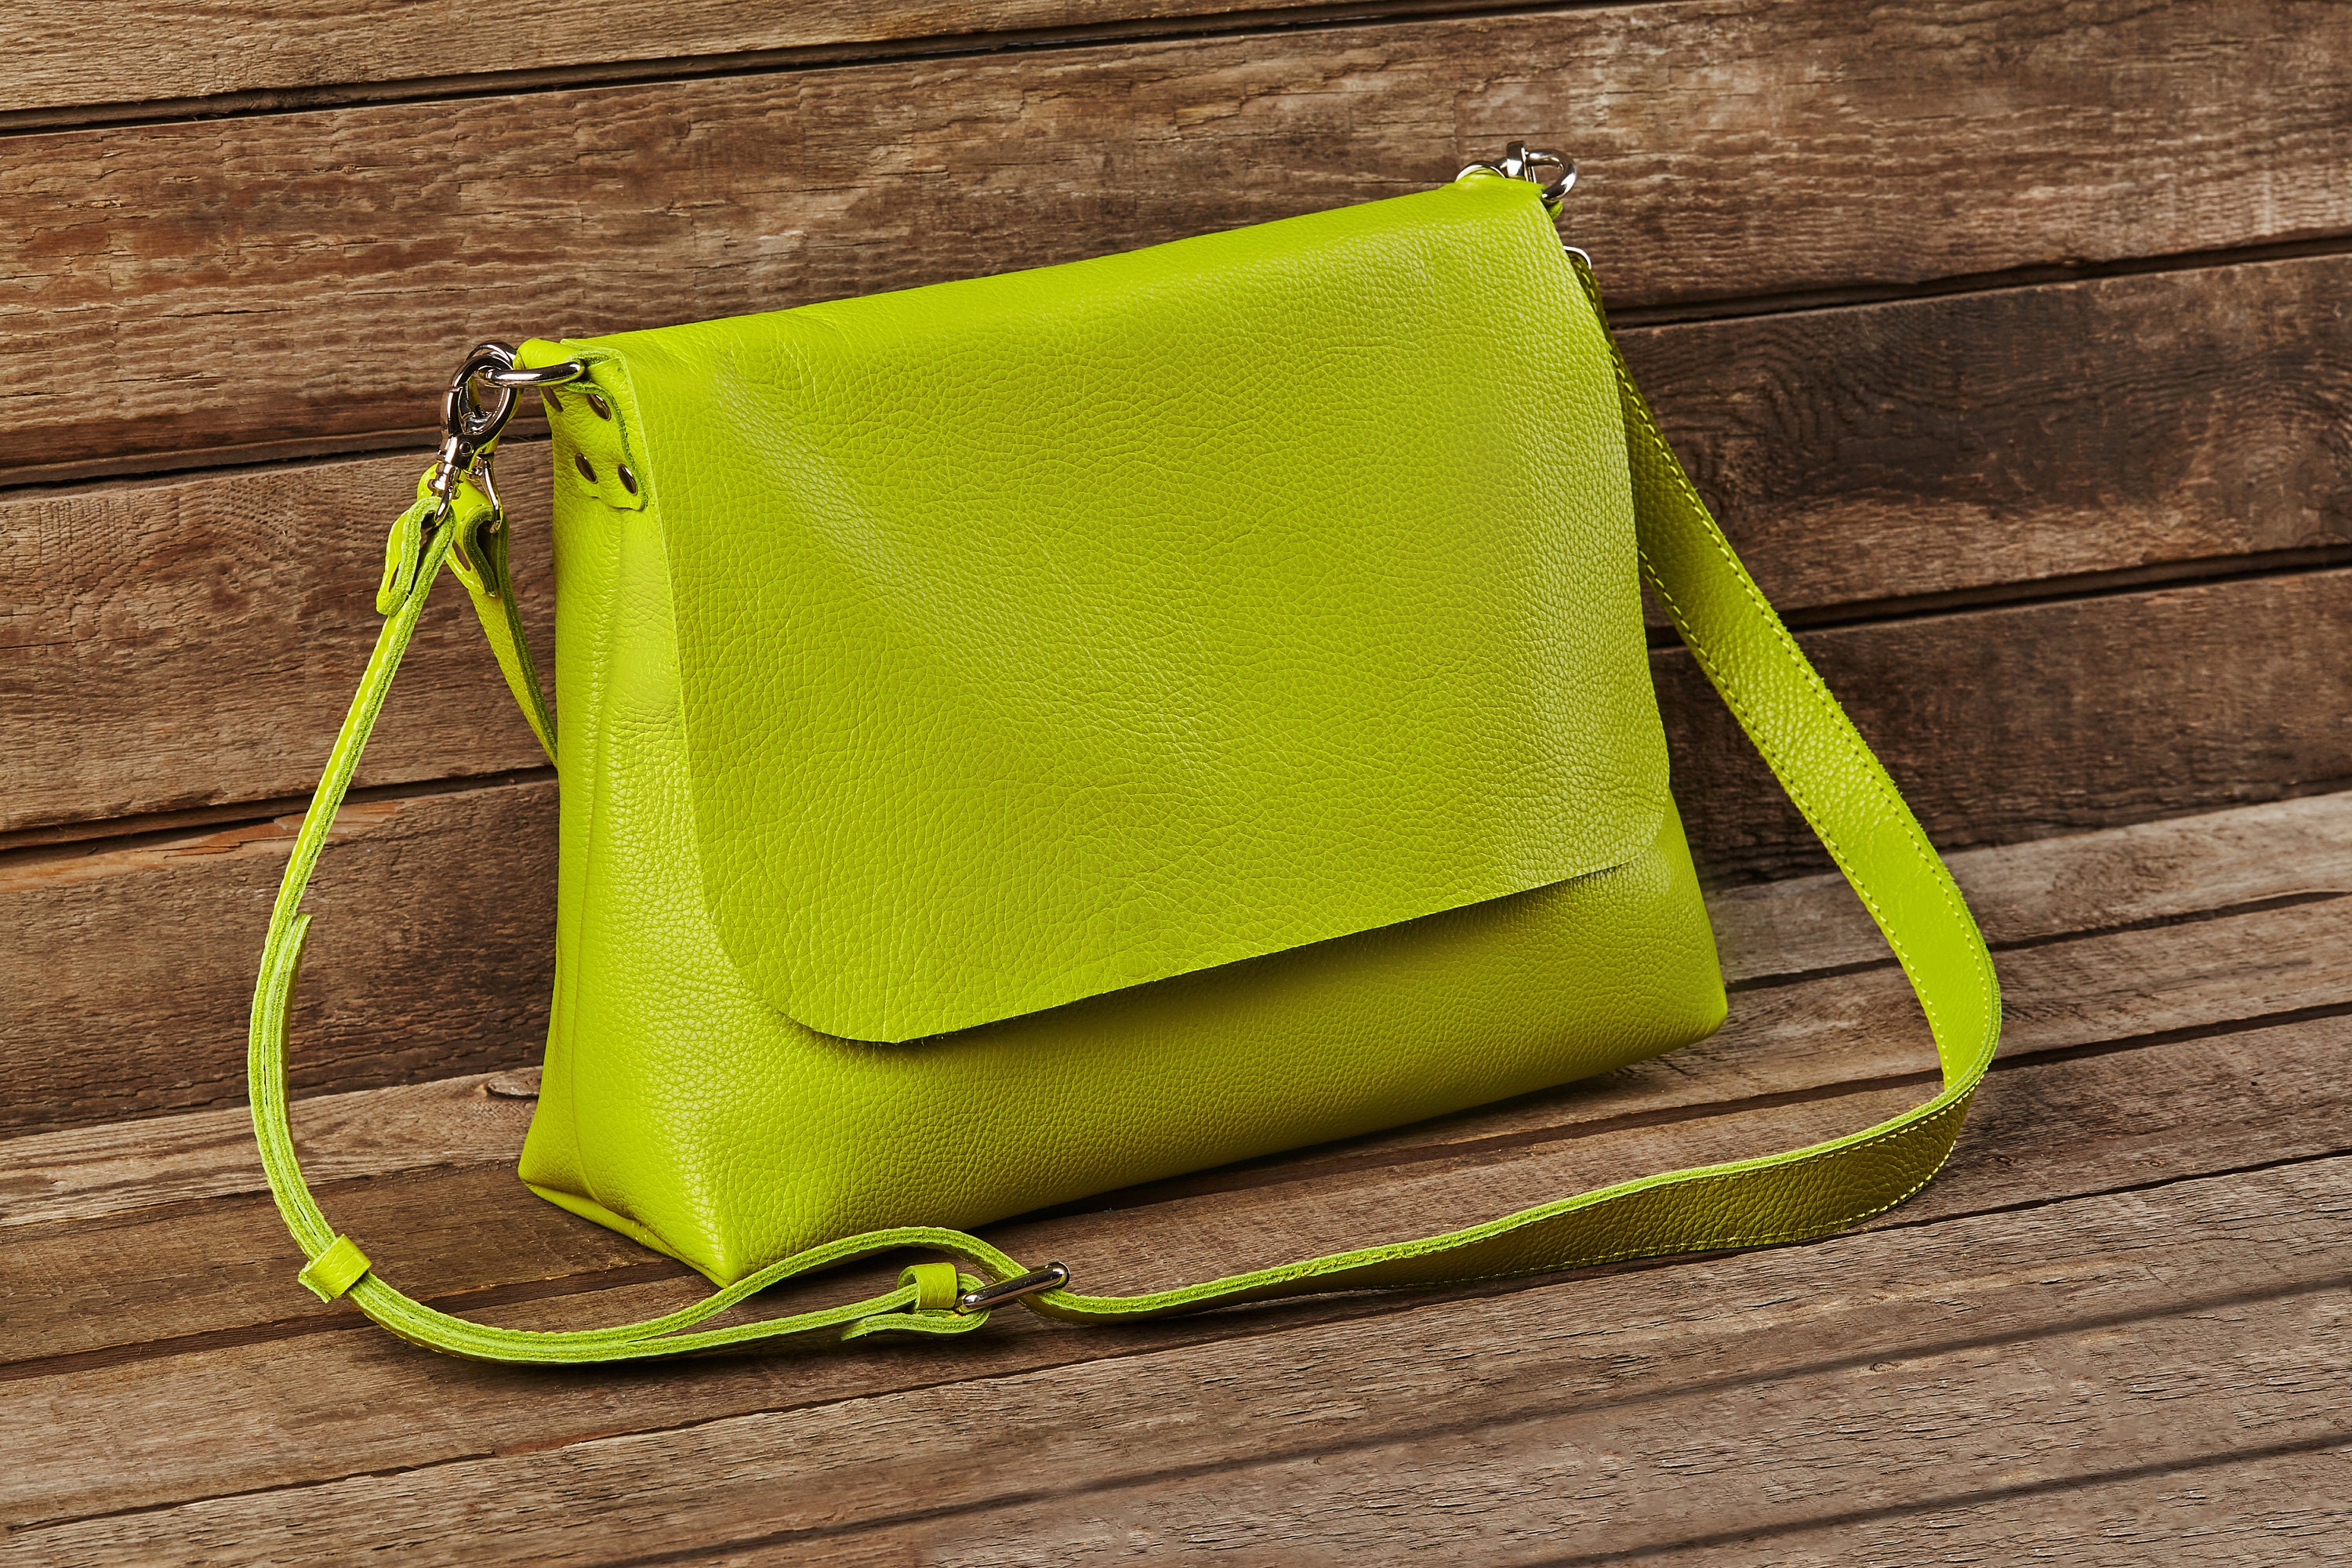 Leather crossbody bag light green color | Etsy